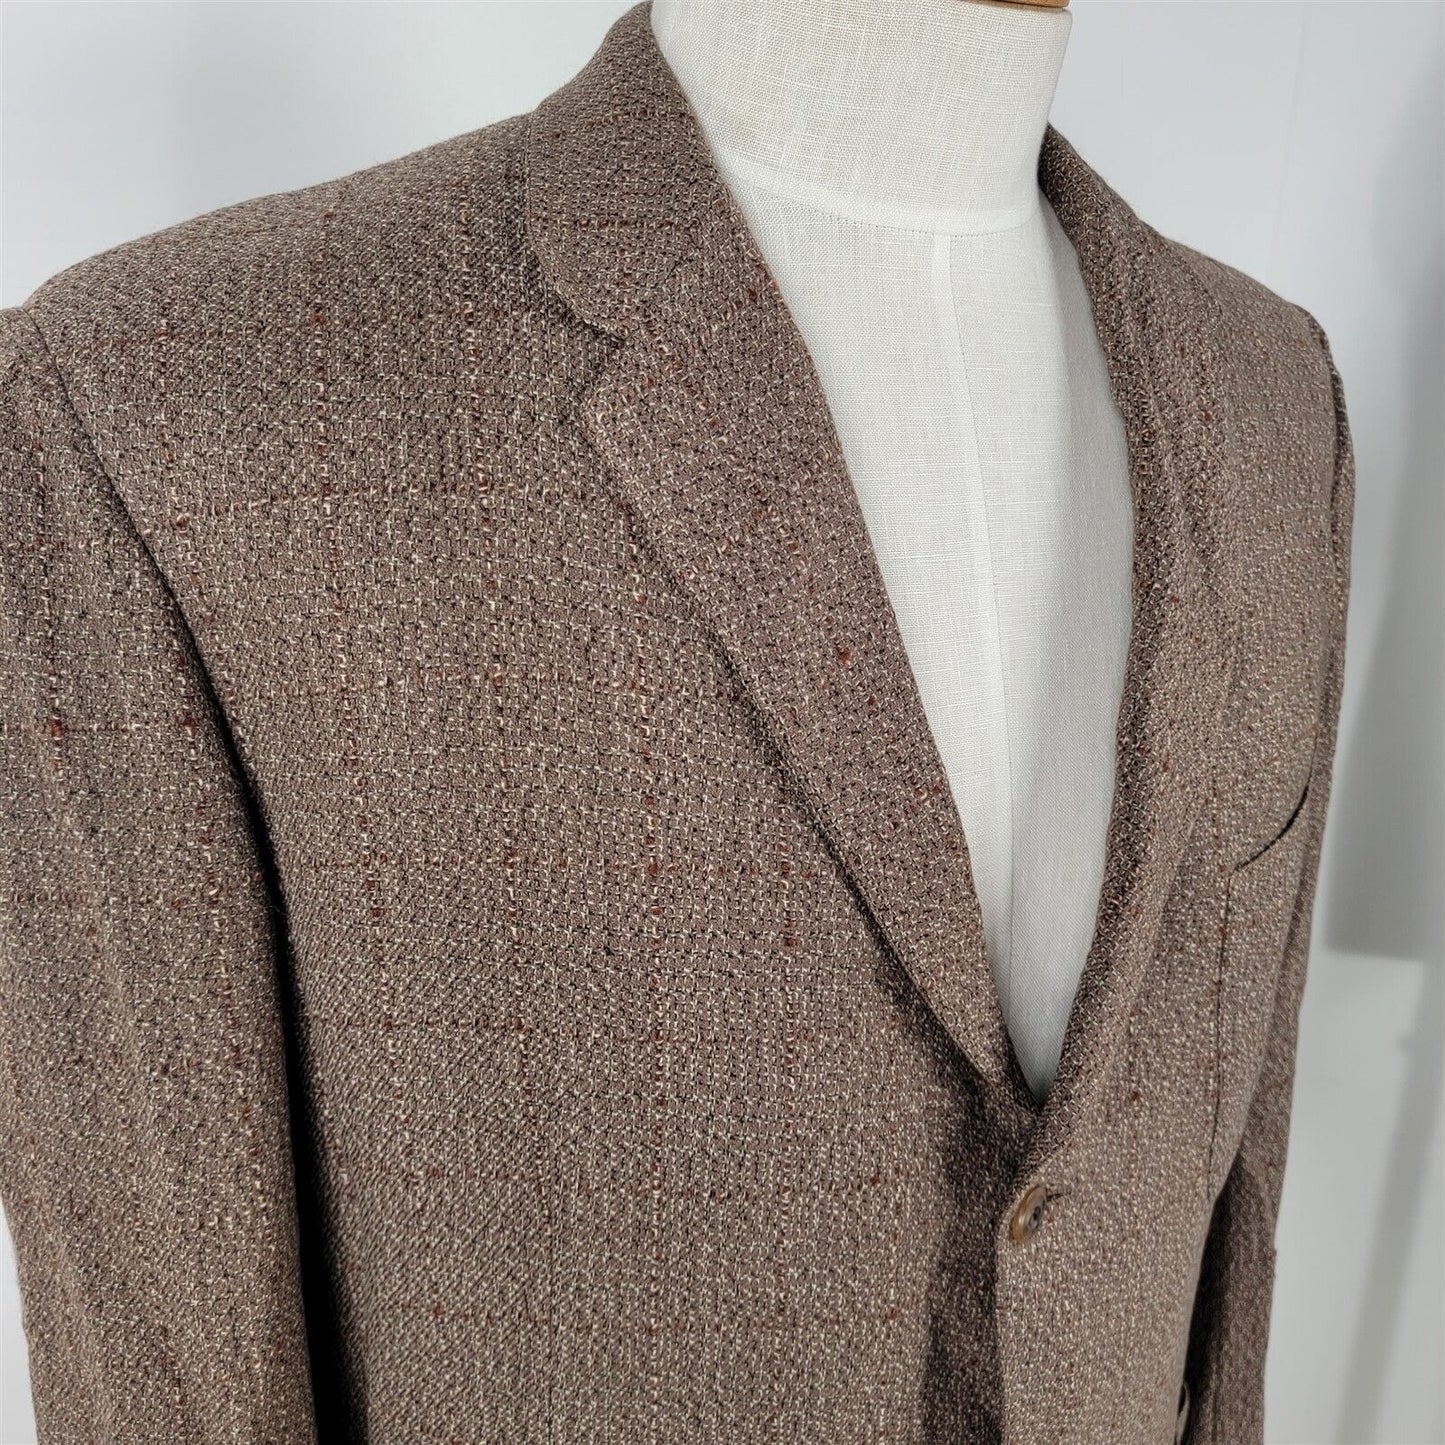 Vintage 1960s Hickey Freeman Littler Brown Blazer Suit Sports Jacket Coat